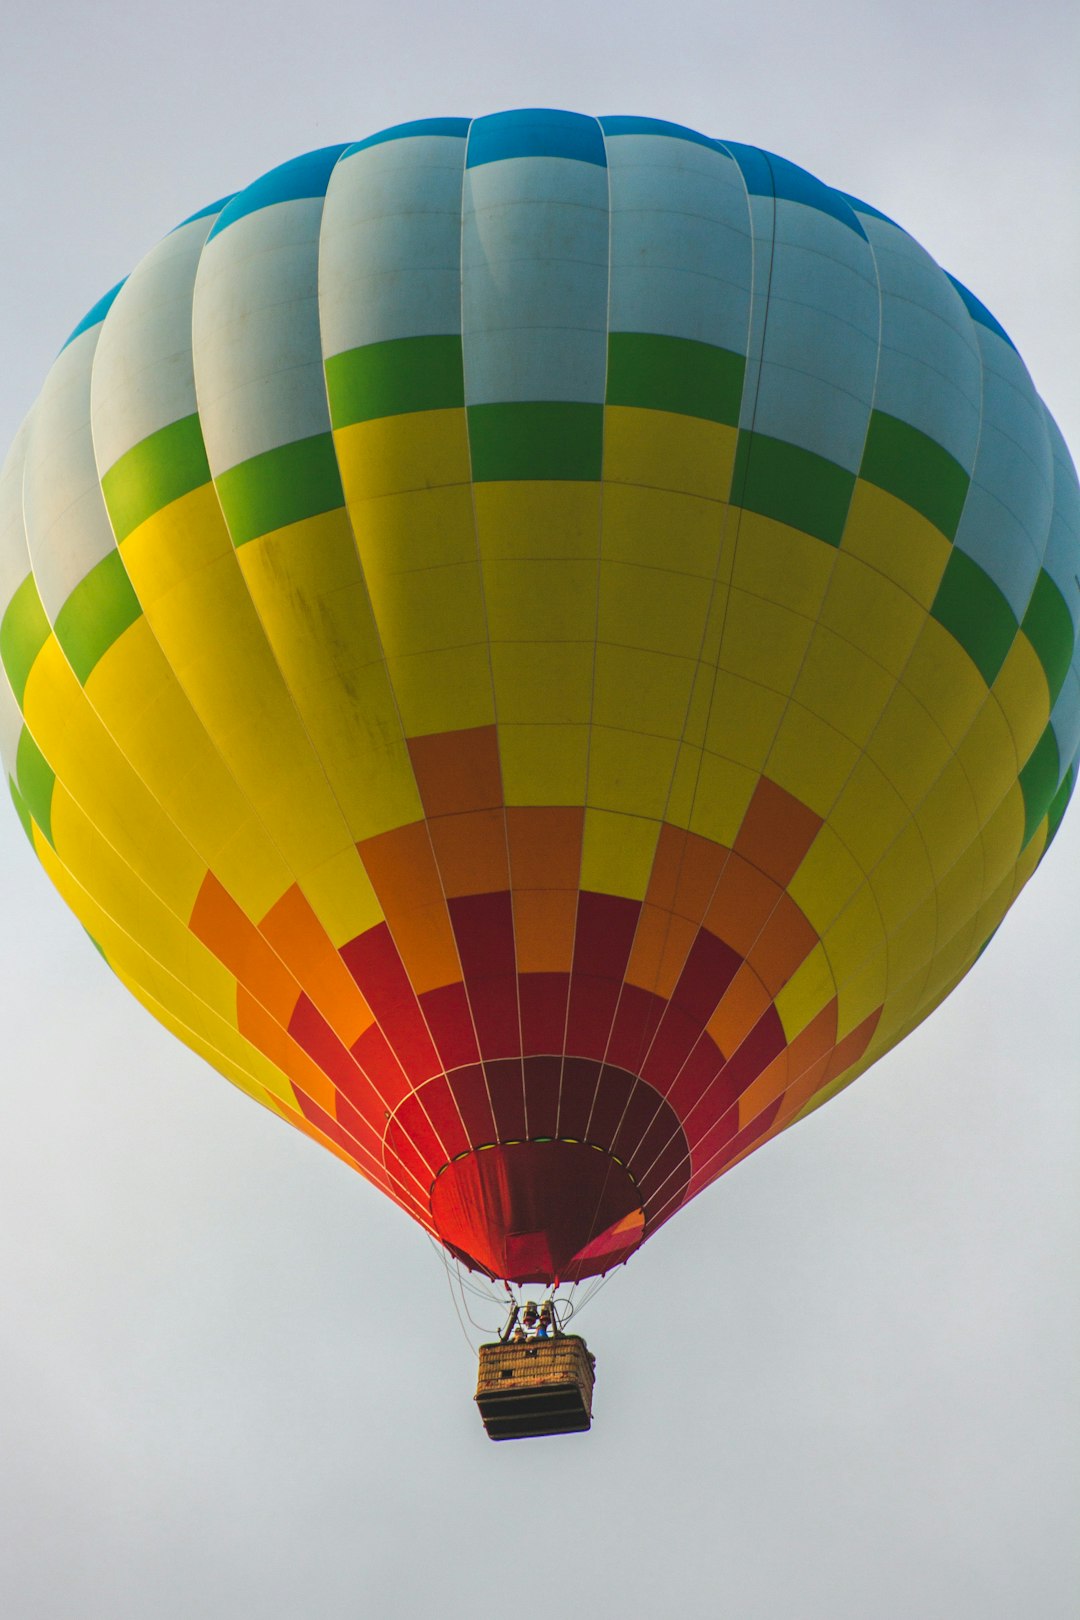 photo of Omaha Hot air ballooning near Omaha's Henry Doorly Zoo and Aquarium